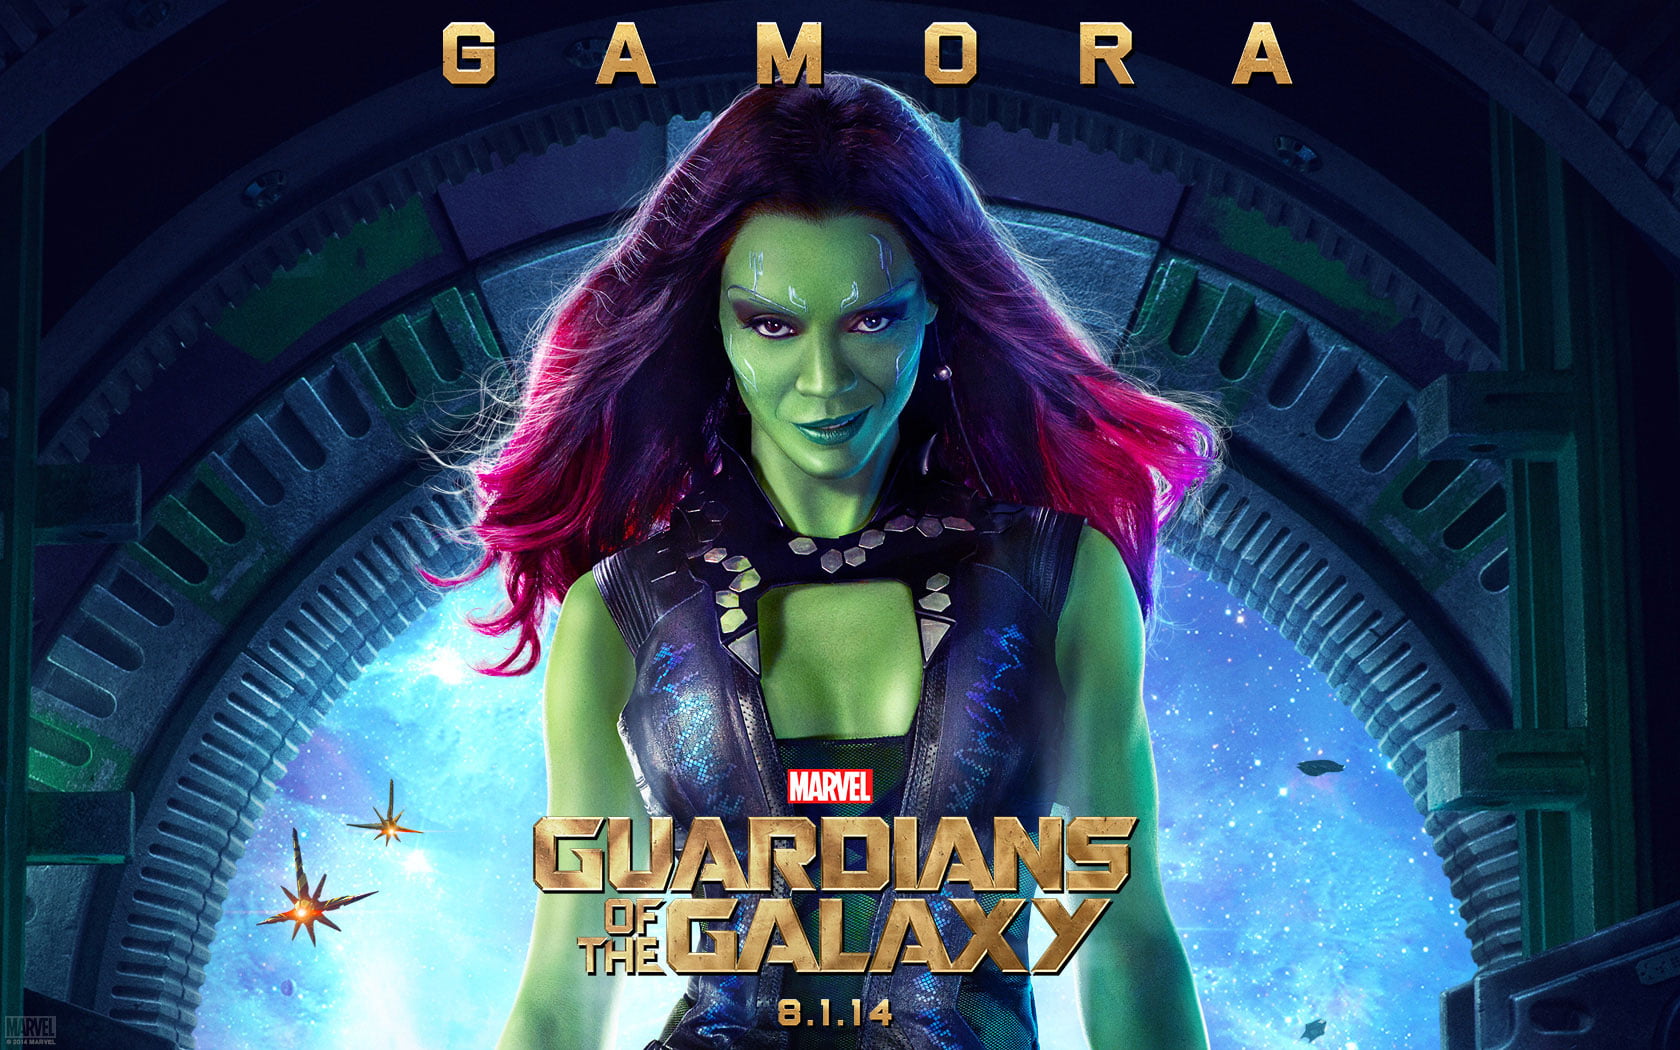 Gamora digital wallpaper, Gamora , Marvel Comics, Guardians of the Galaxy, movie poster